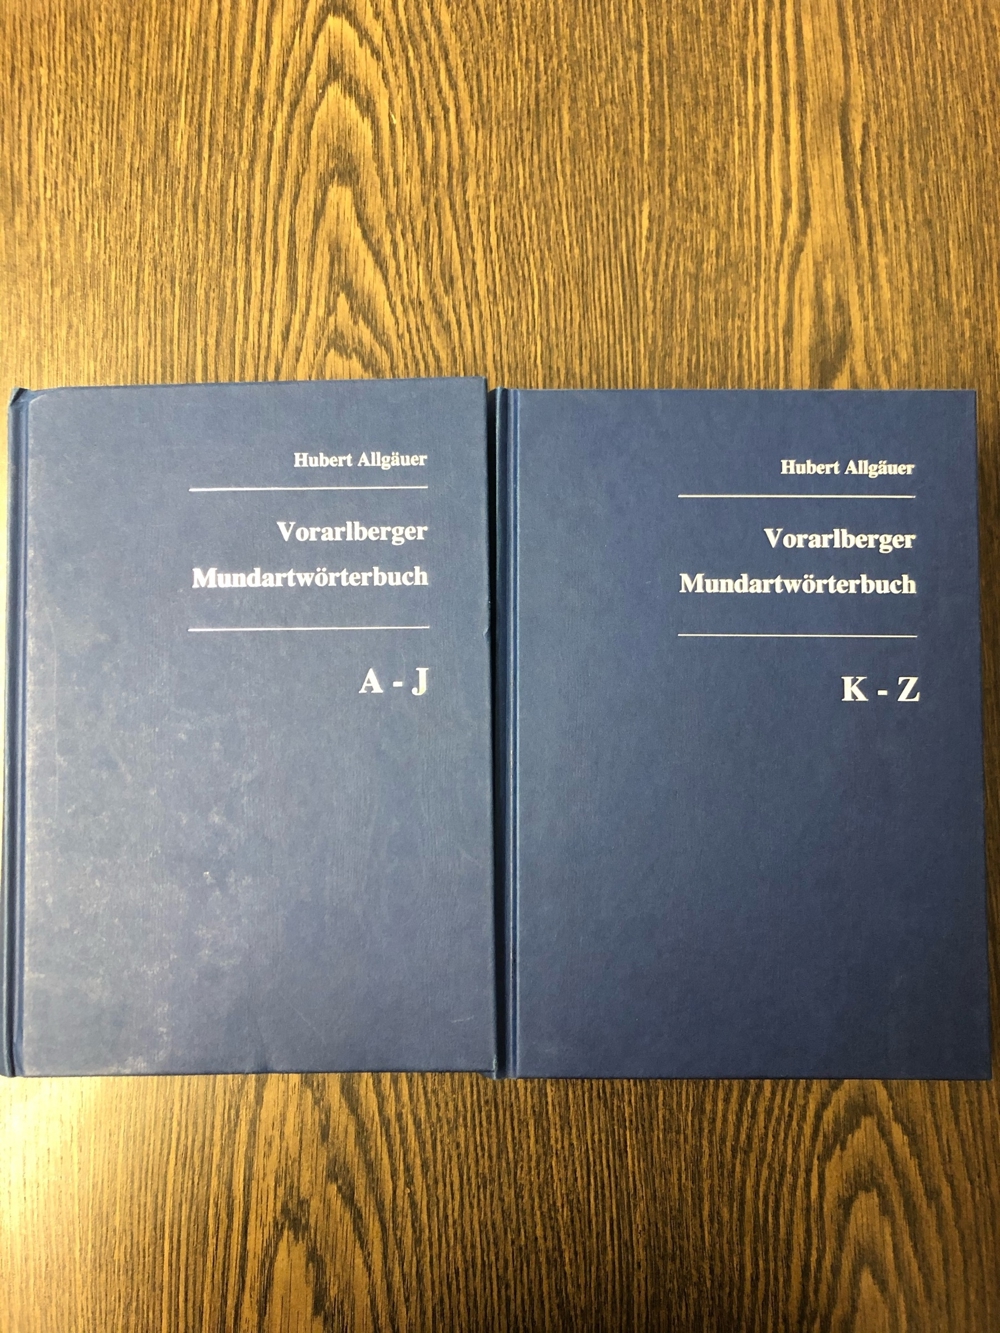 Vorarlberger Mundartwörterbuch, Dialekt Vorarlberg, H. Allgäuer